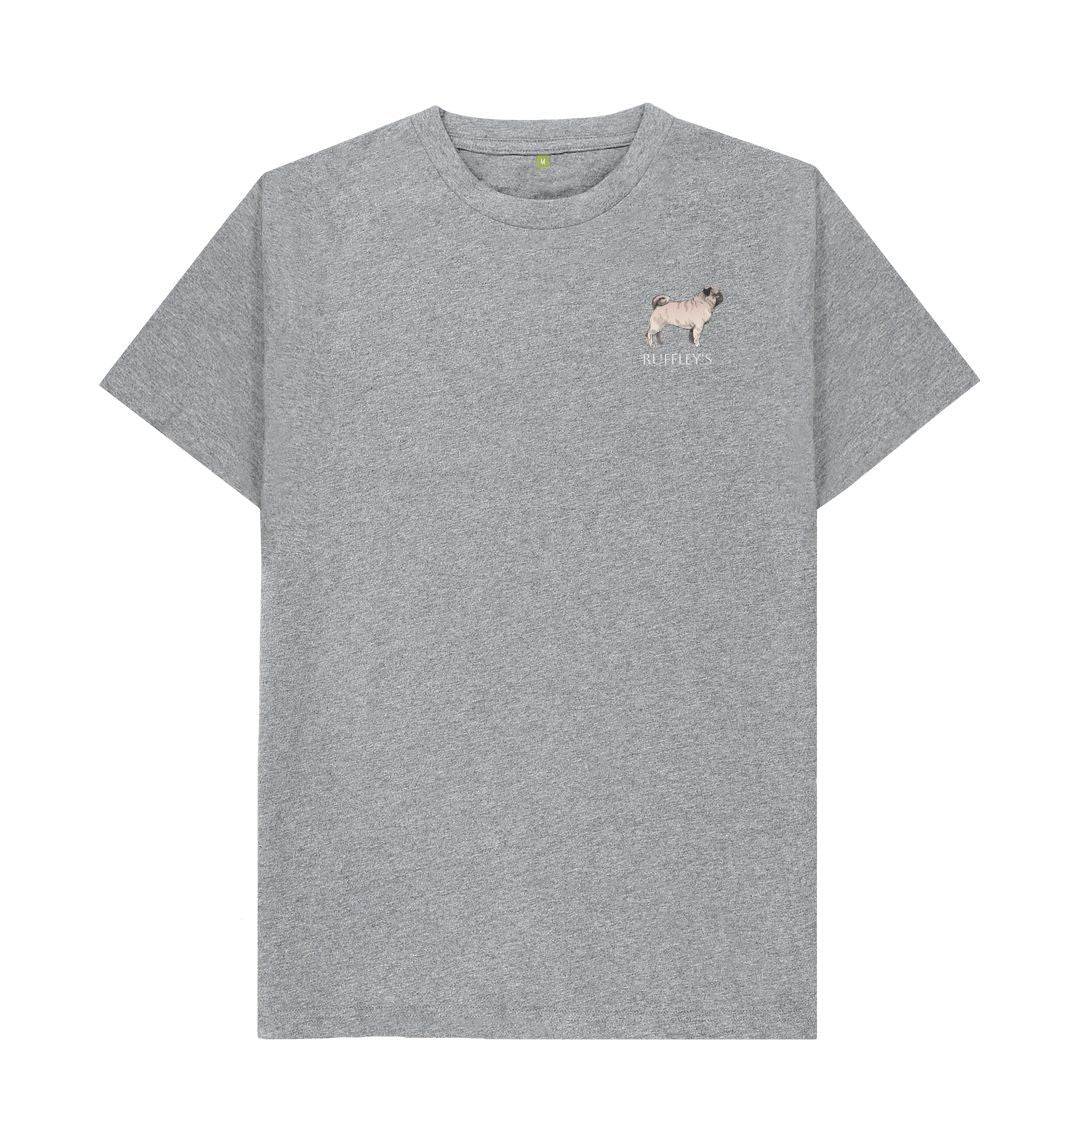 Athletic Grey Pug - Mens T-Shirt